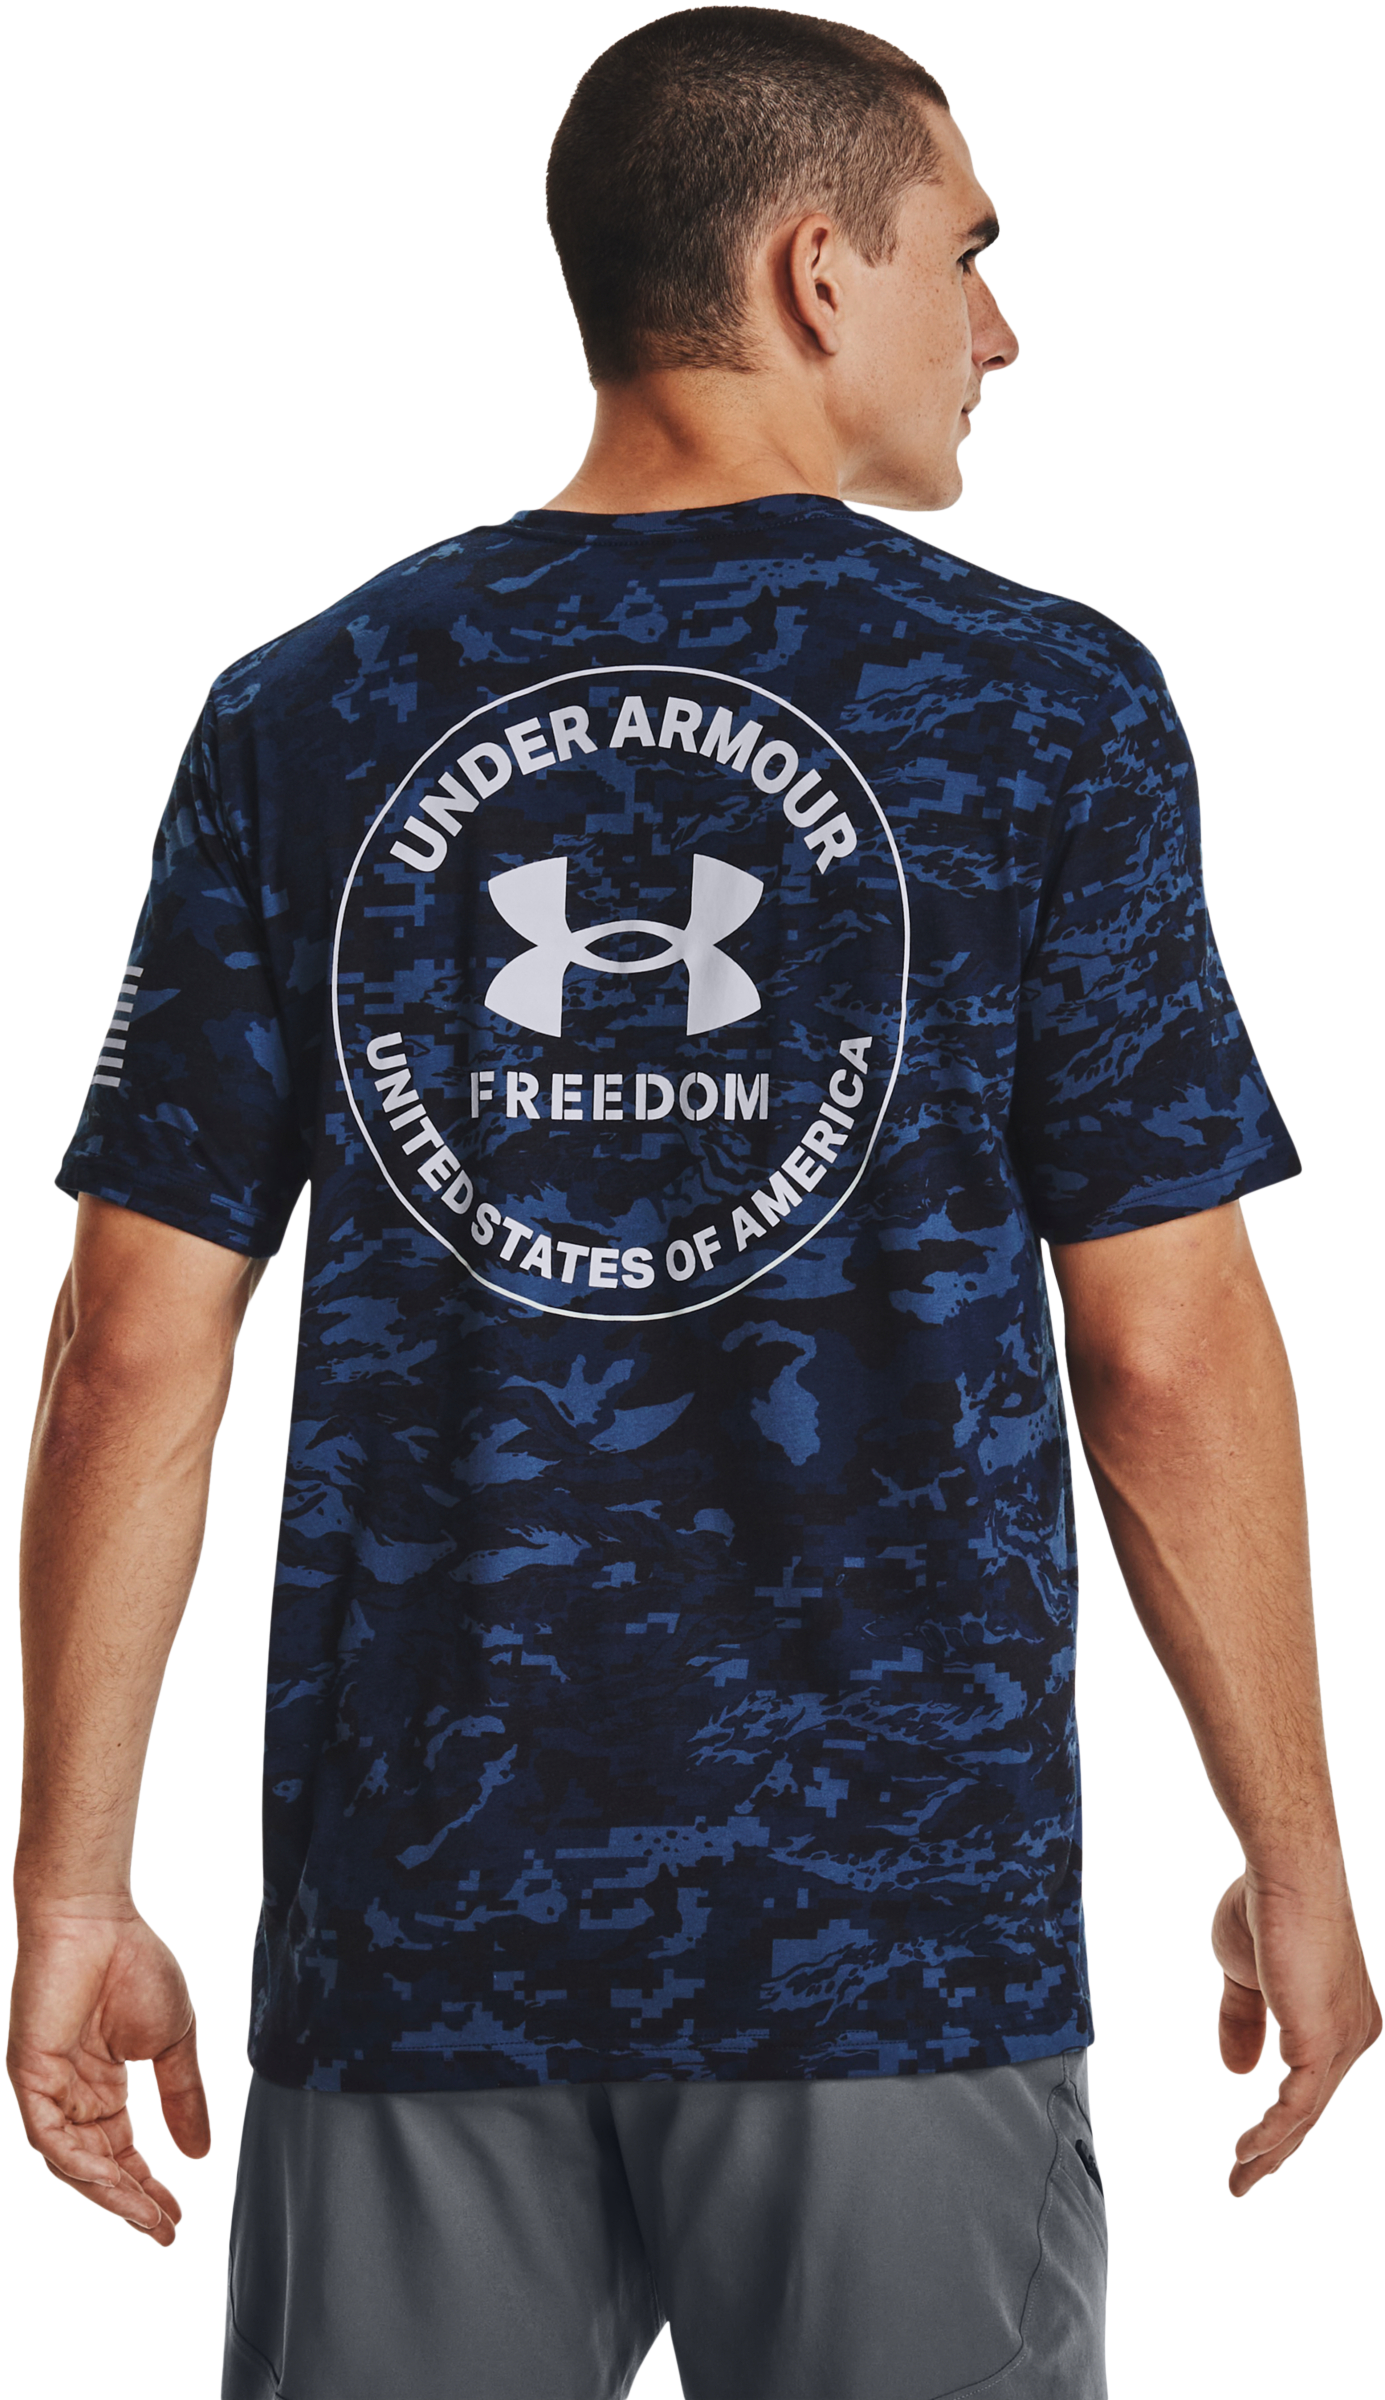 Under Armour Freedom Camo Short-Sleeve T-Shirt for Men - Academy/Mod Gray - 3XL